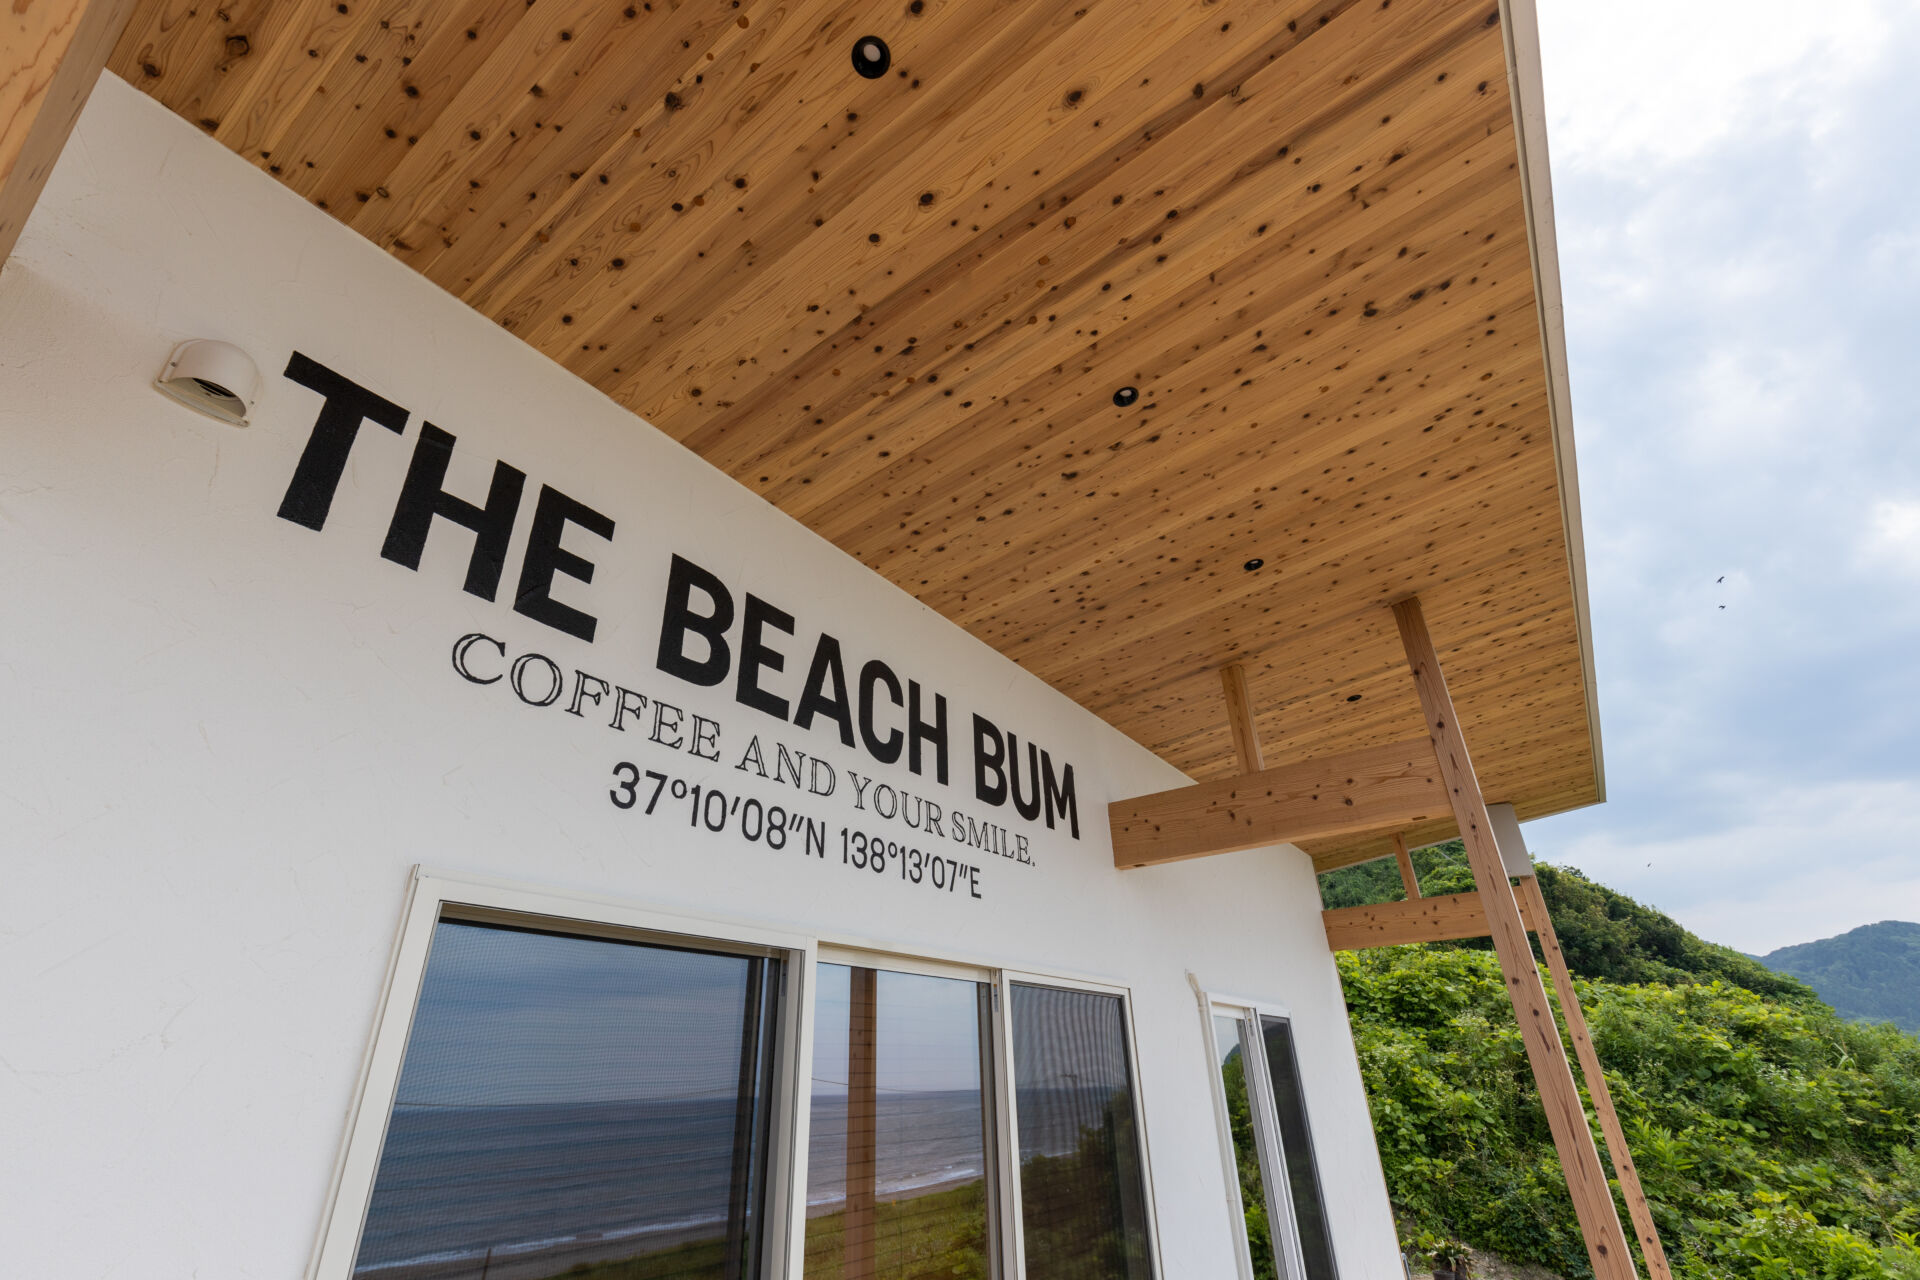 THE BEACH BUM